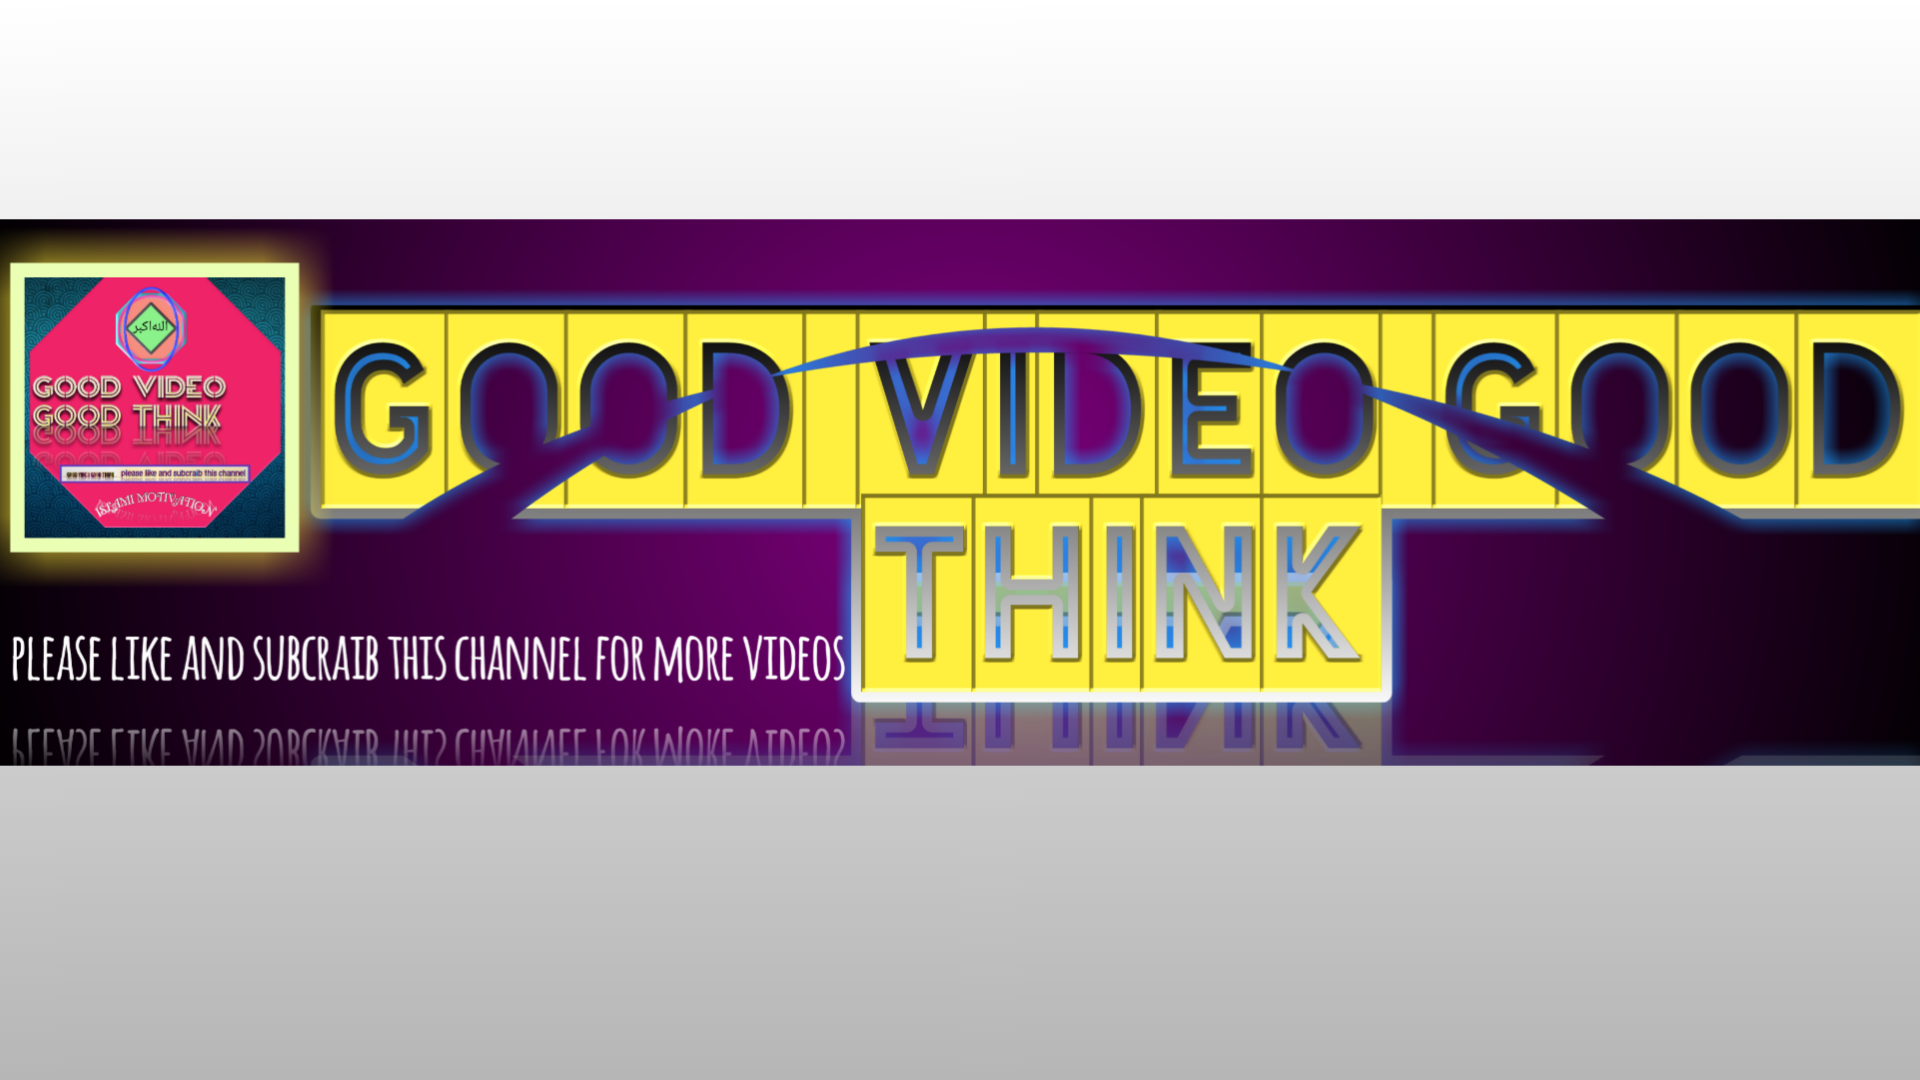 Good video good think